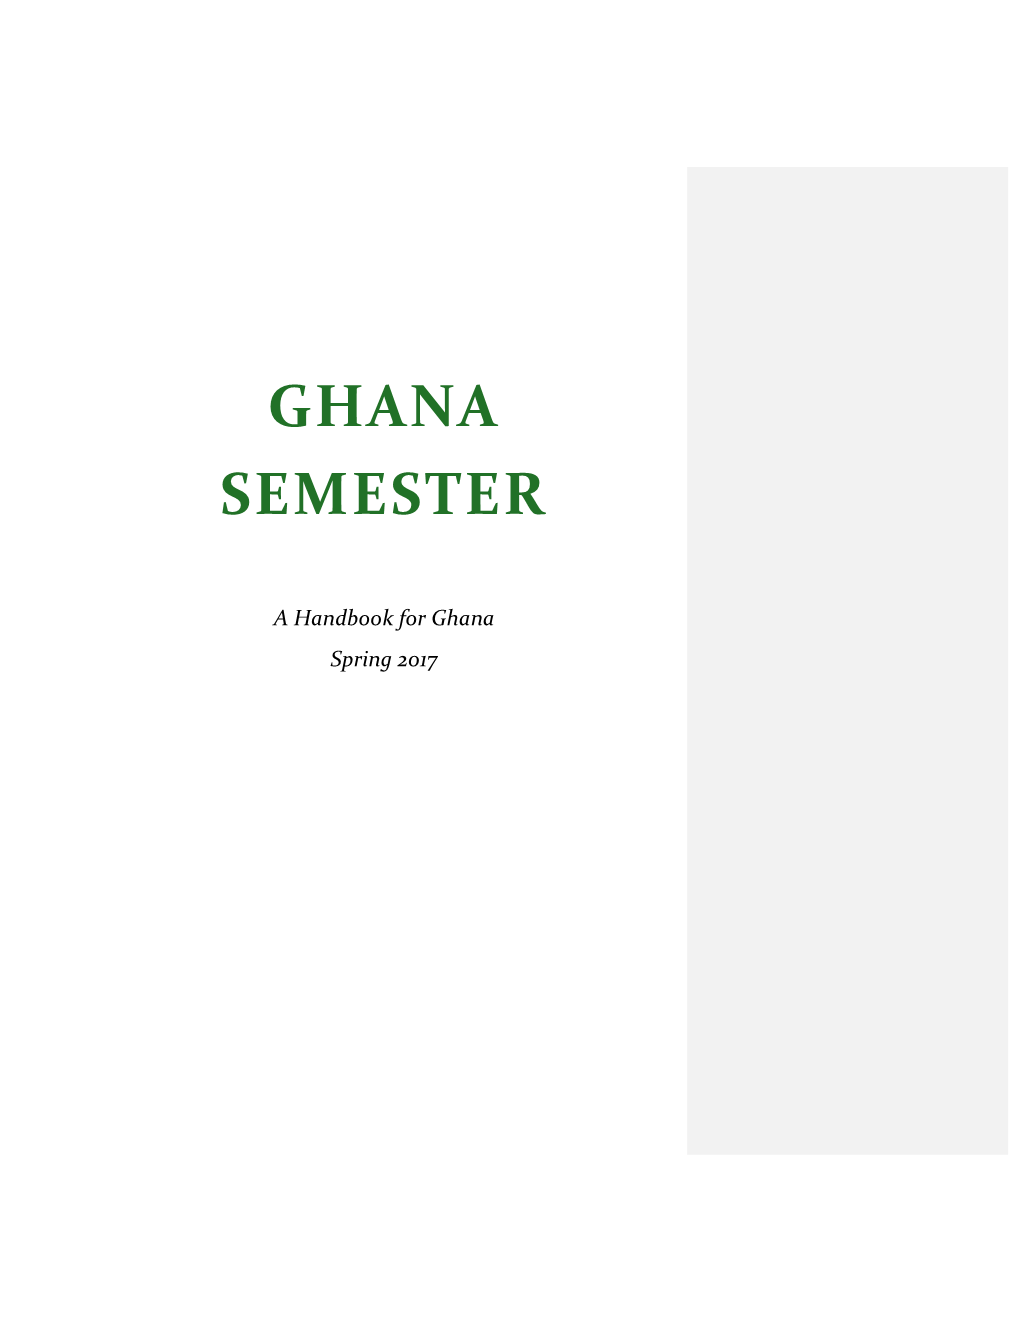 Ghana Semester